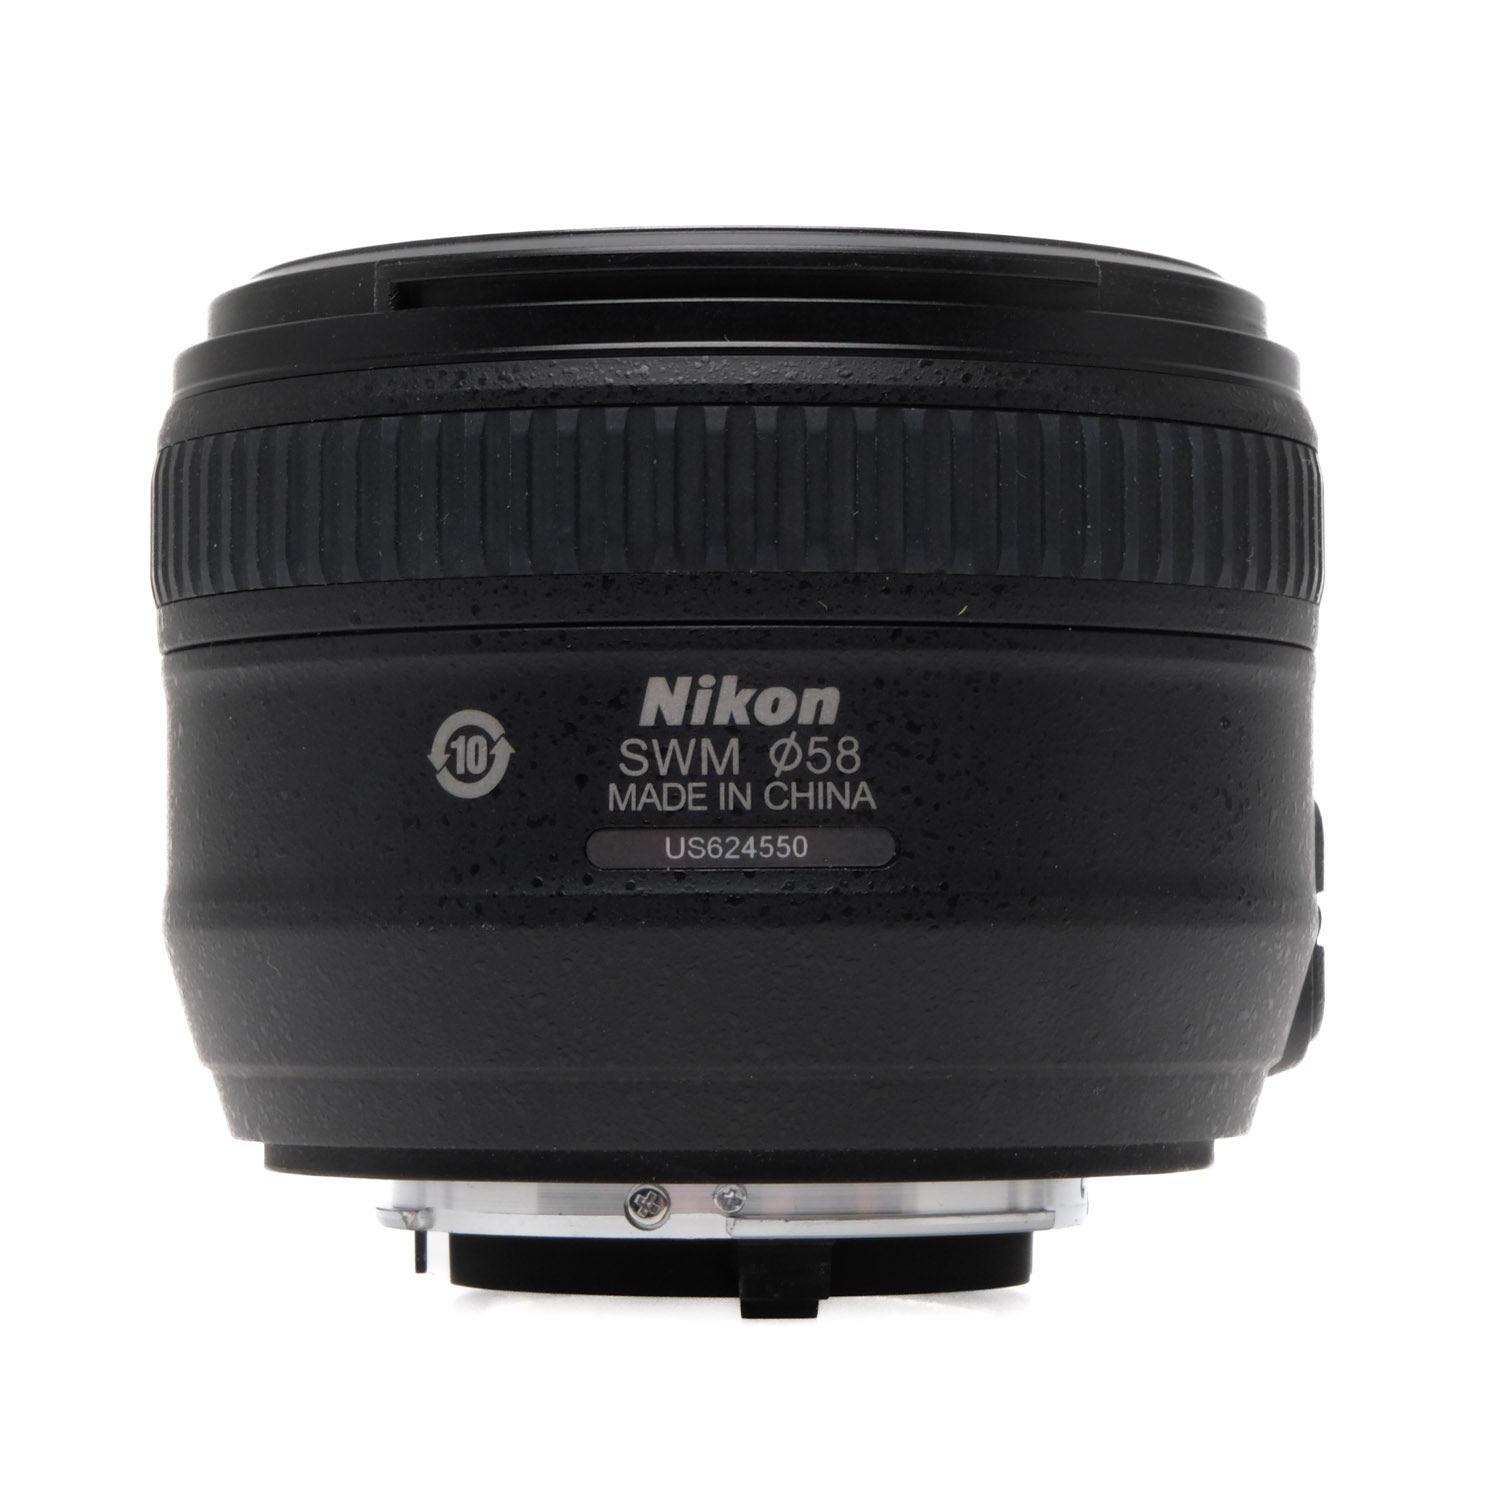 Nikon 50mm f1.4 G US624550